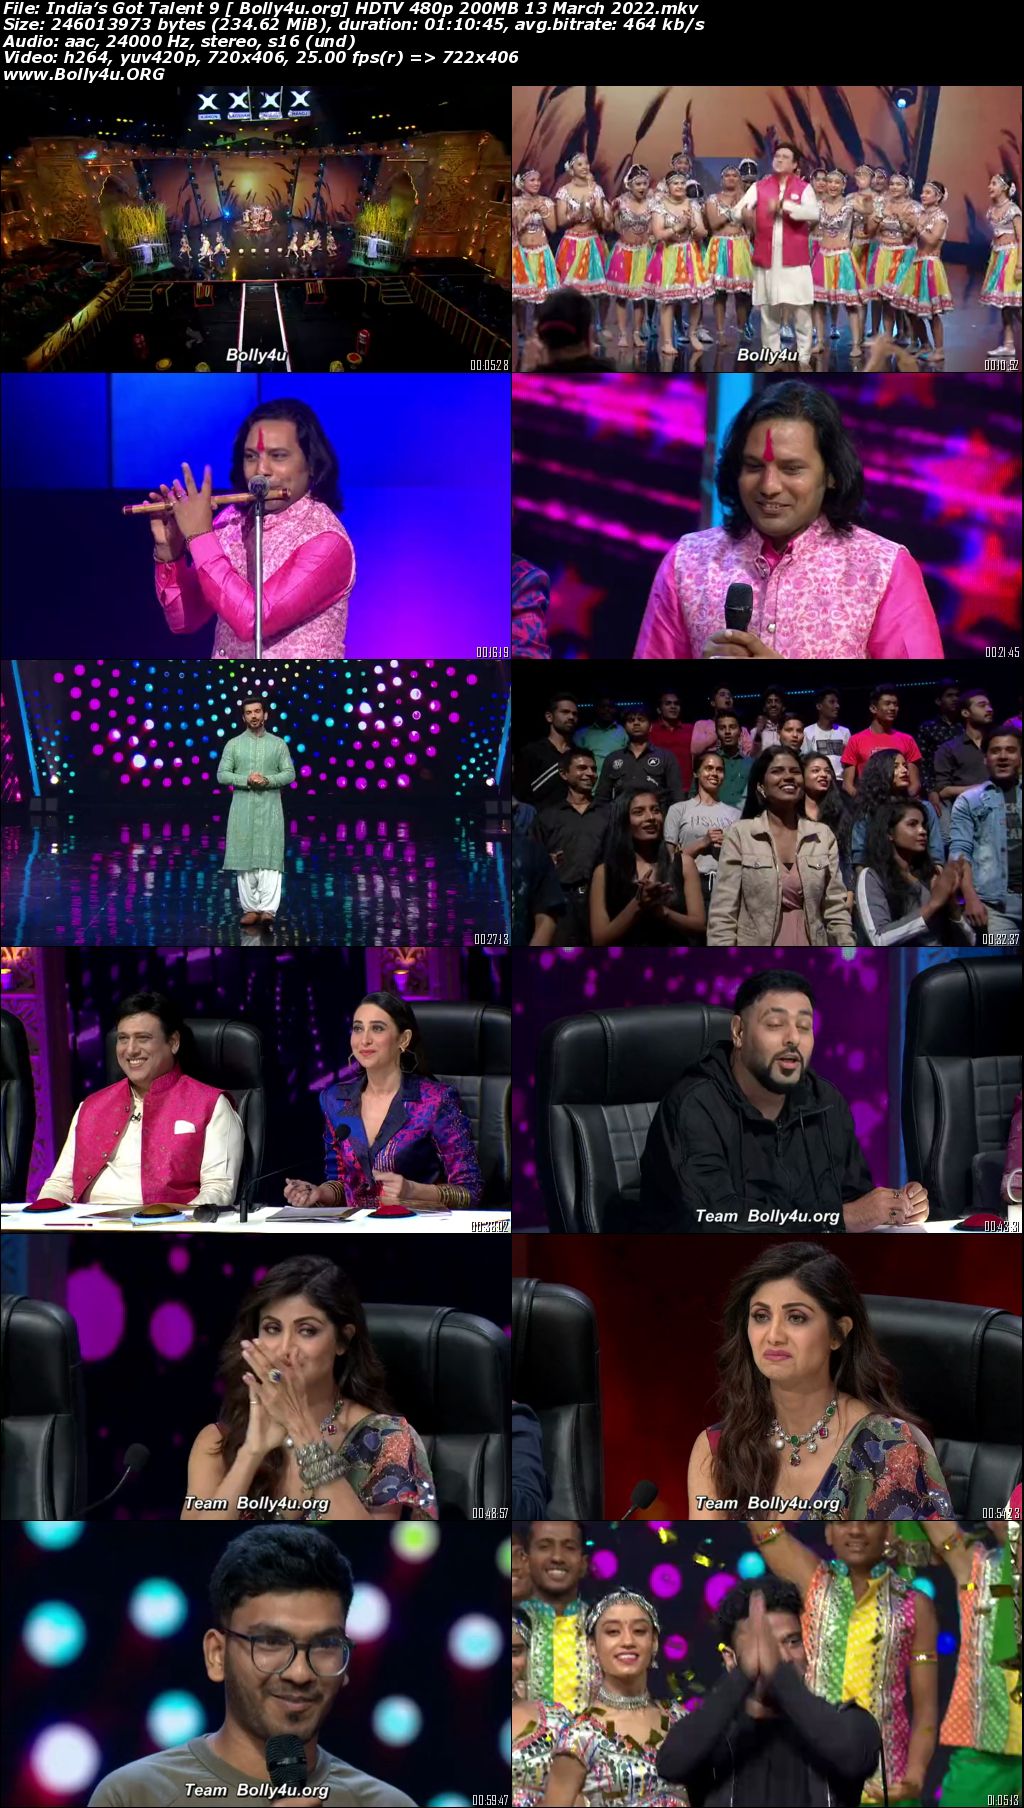 Indias Got Talent 9 HDTV 480p 200MB 13 March 2022 Download